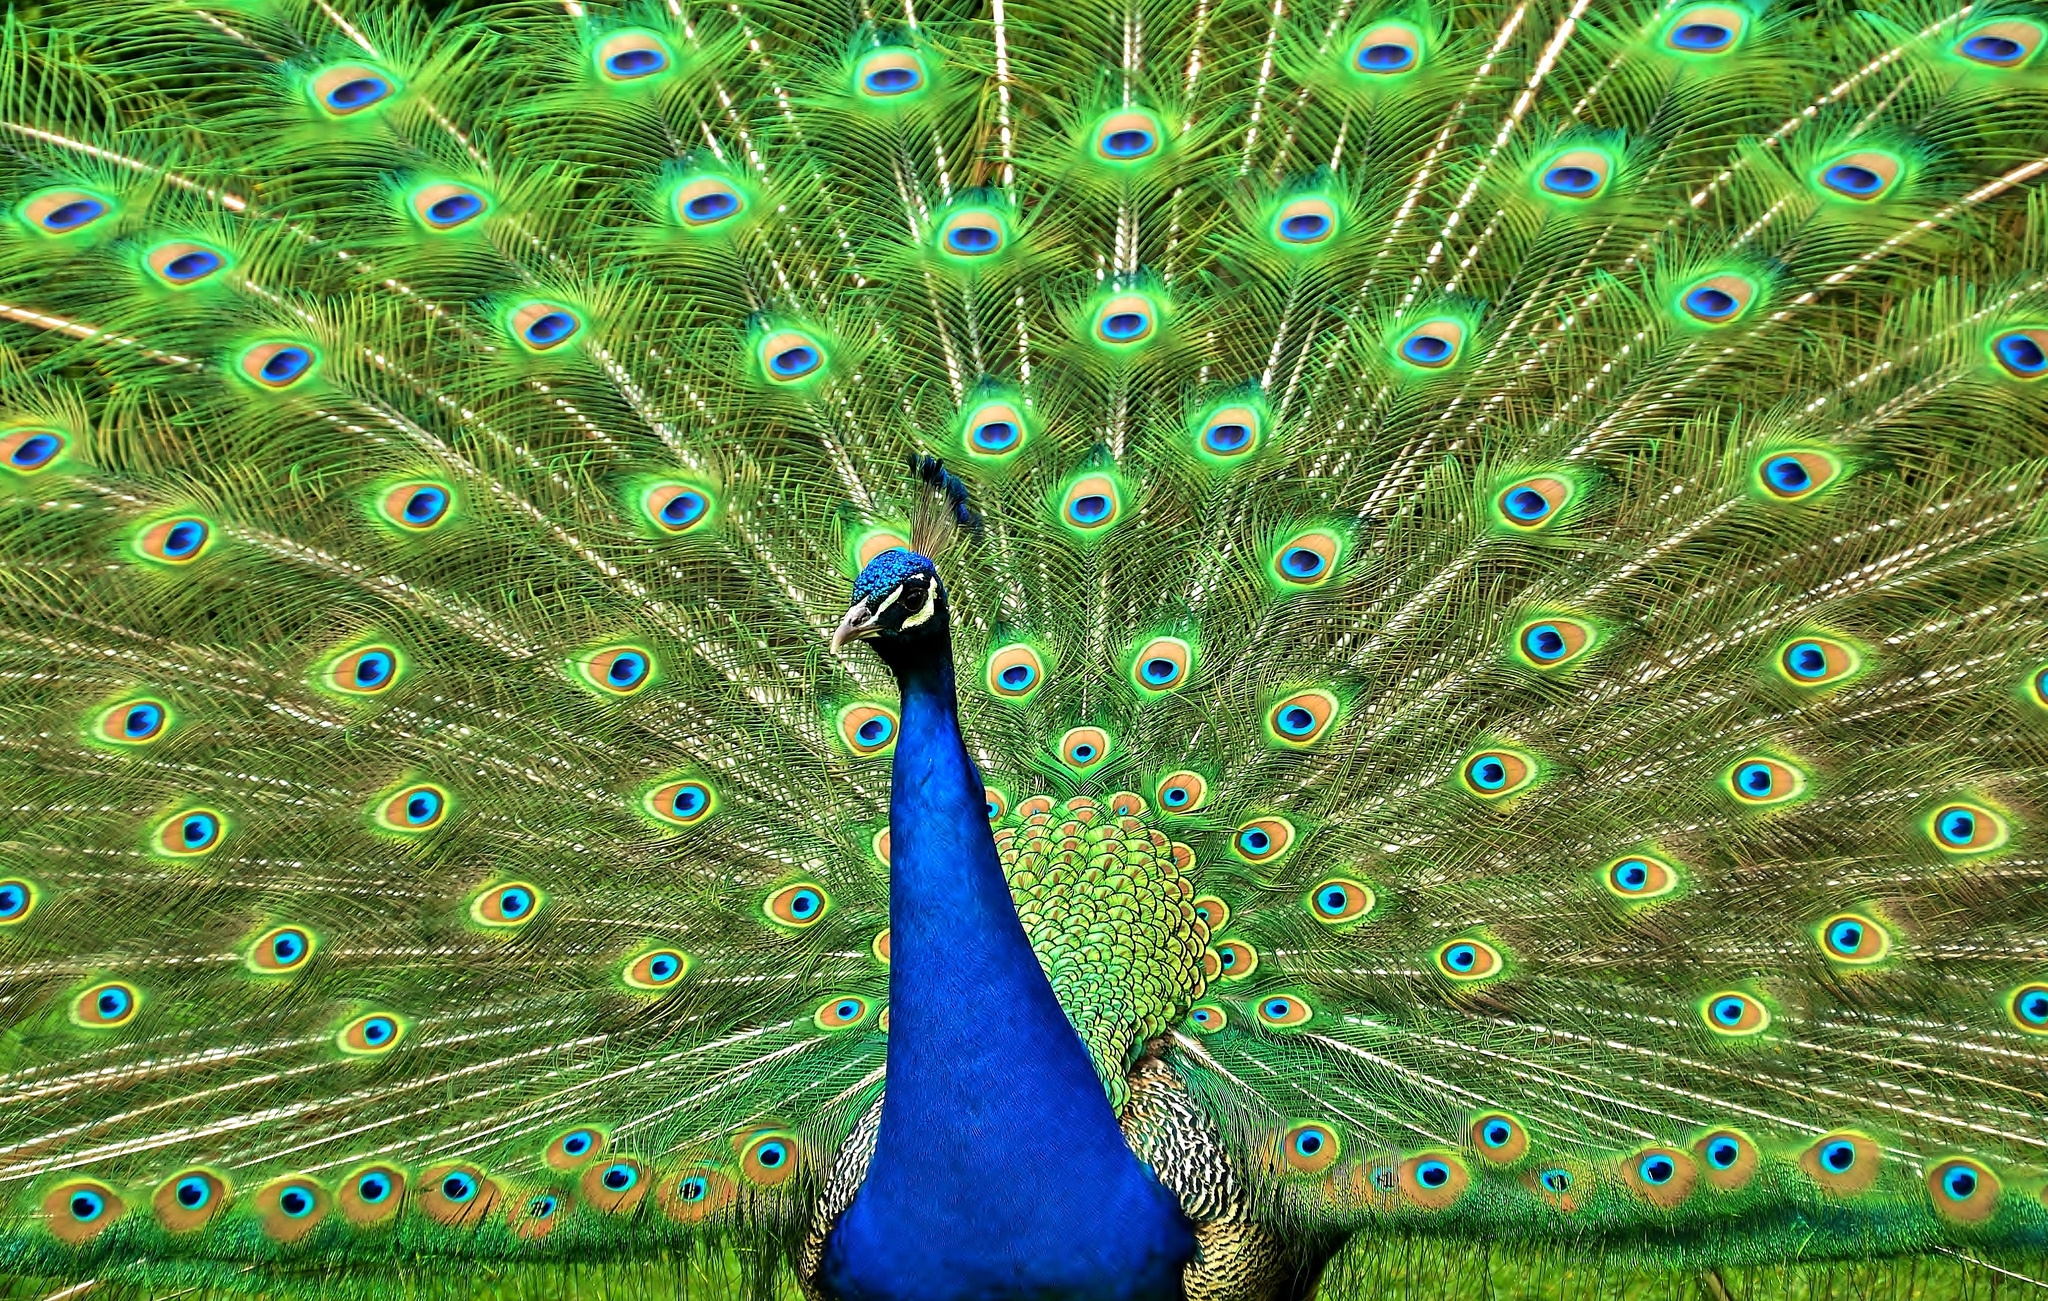 Linux Peacock Wallpaper